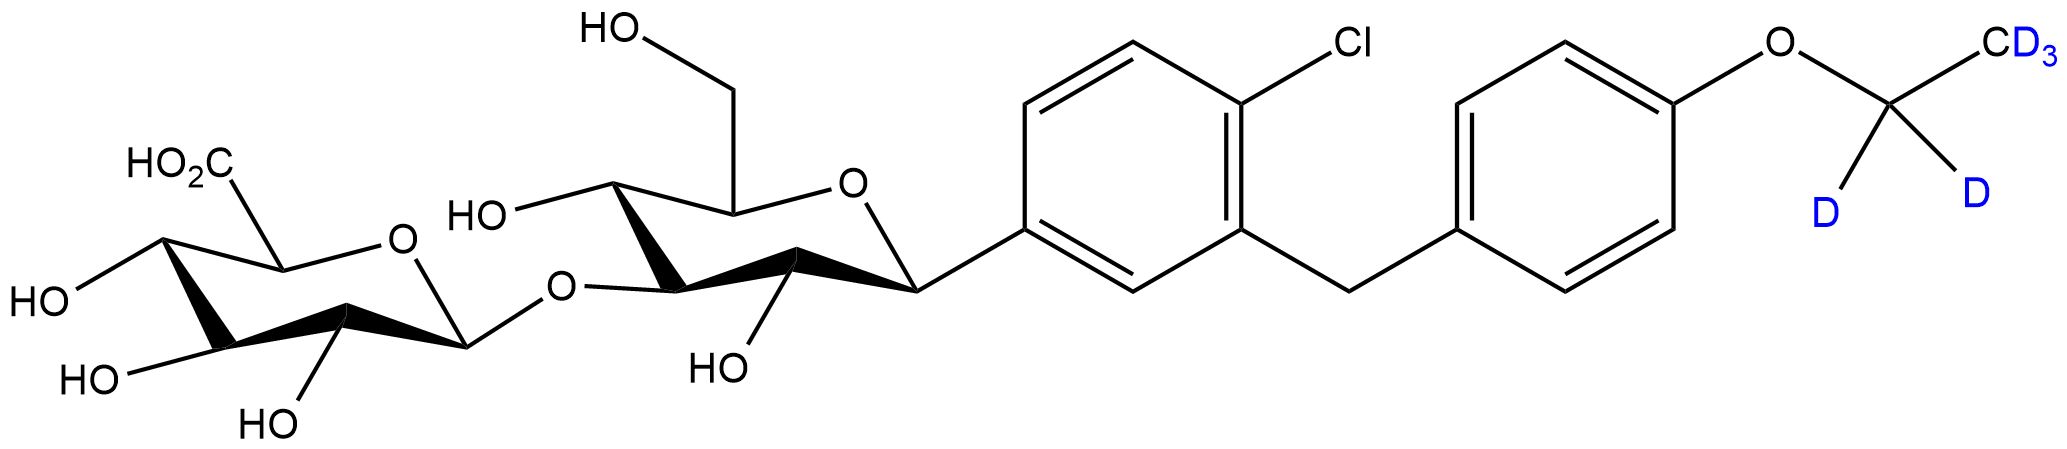 Sussex Research Related Products - Dapagliflozine-3-Glucuronide-d5